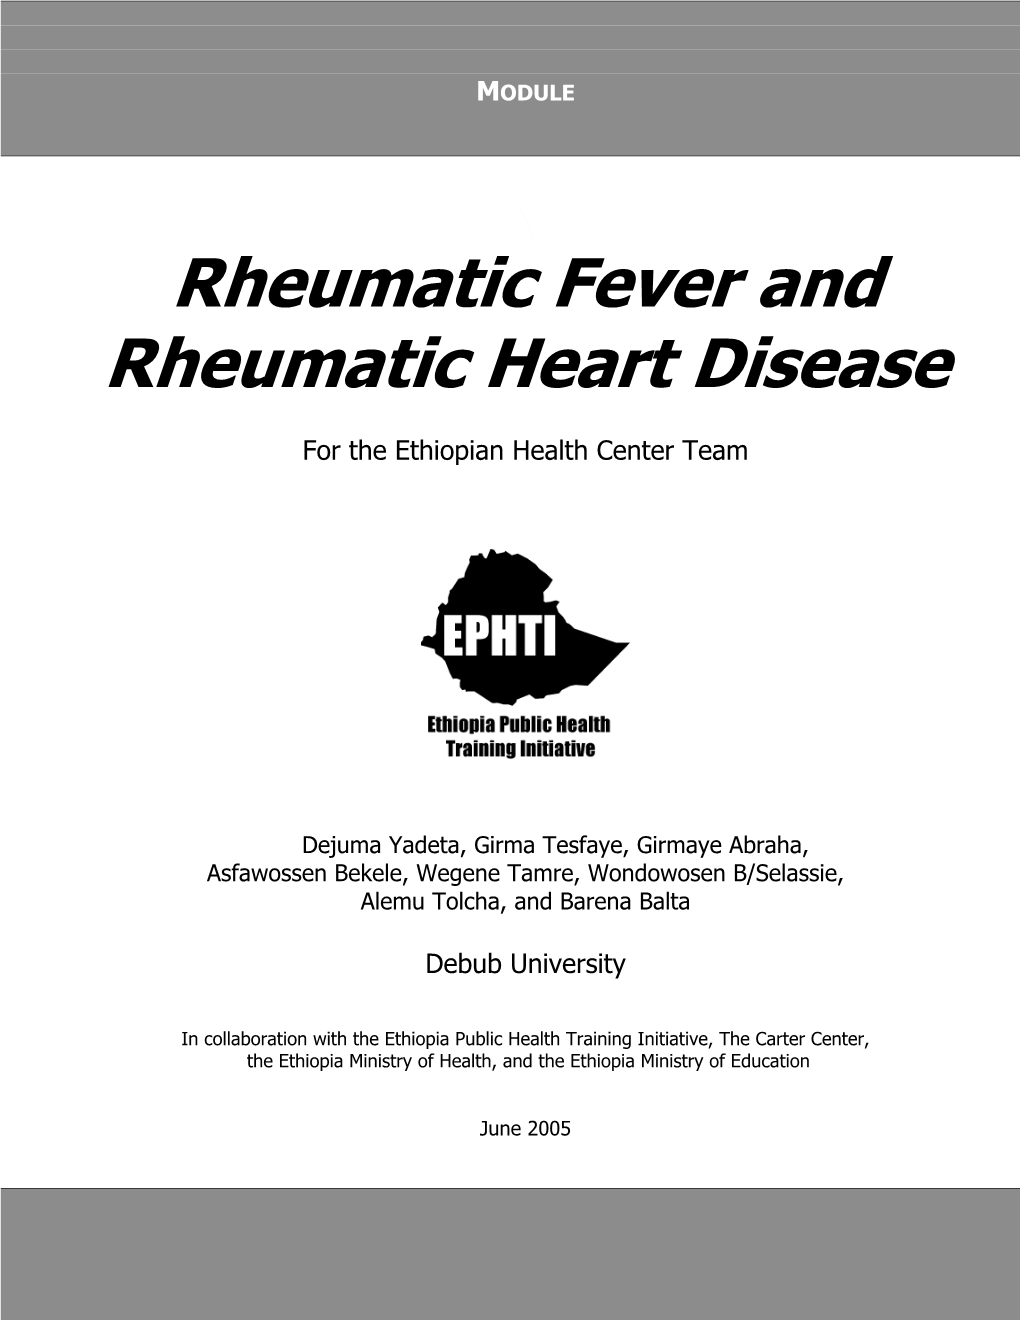 Rheumatic Fever and Rheumatic Heart Disease